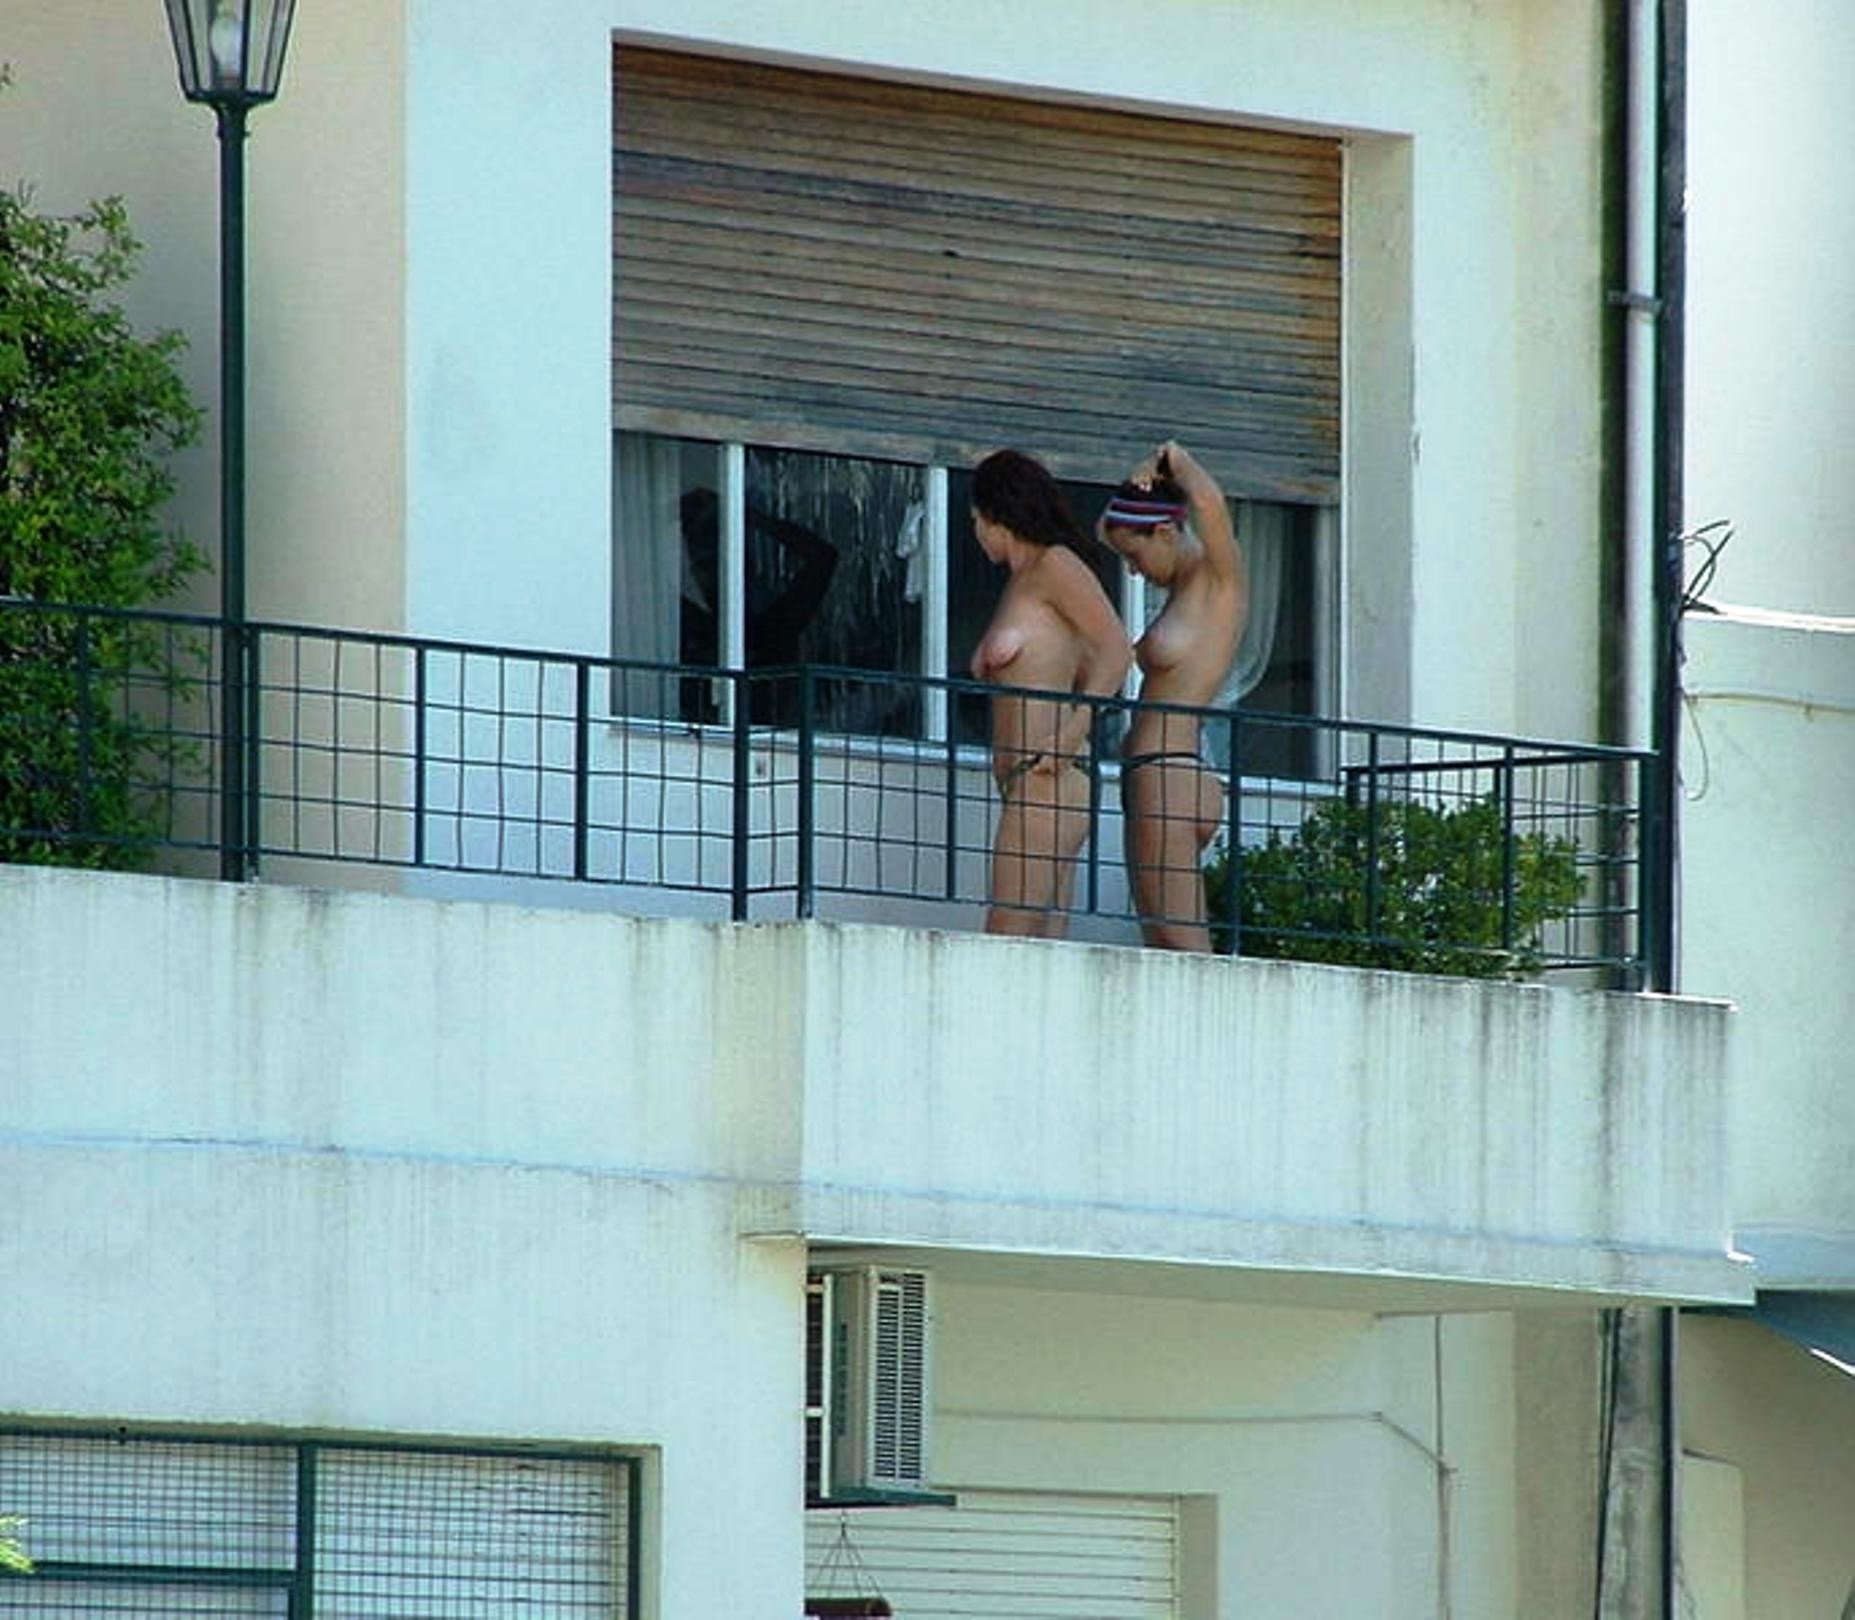 Подглядывание в чужие окна порно видео на lavandasport.ru